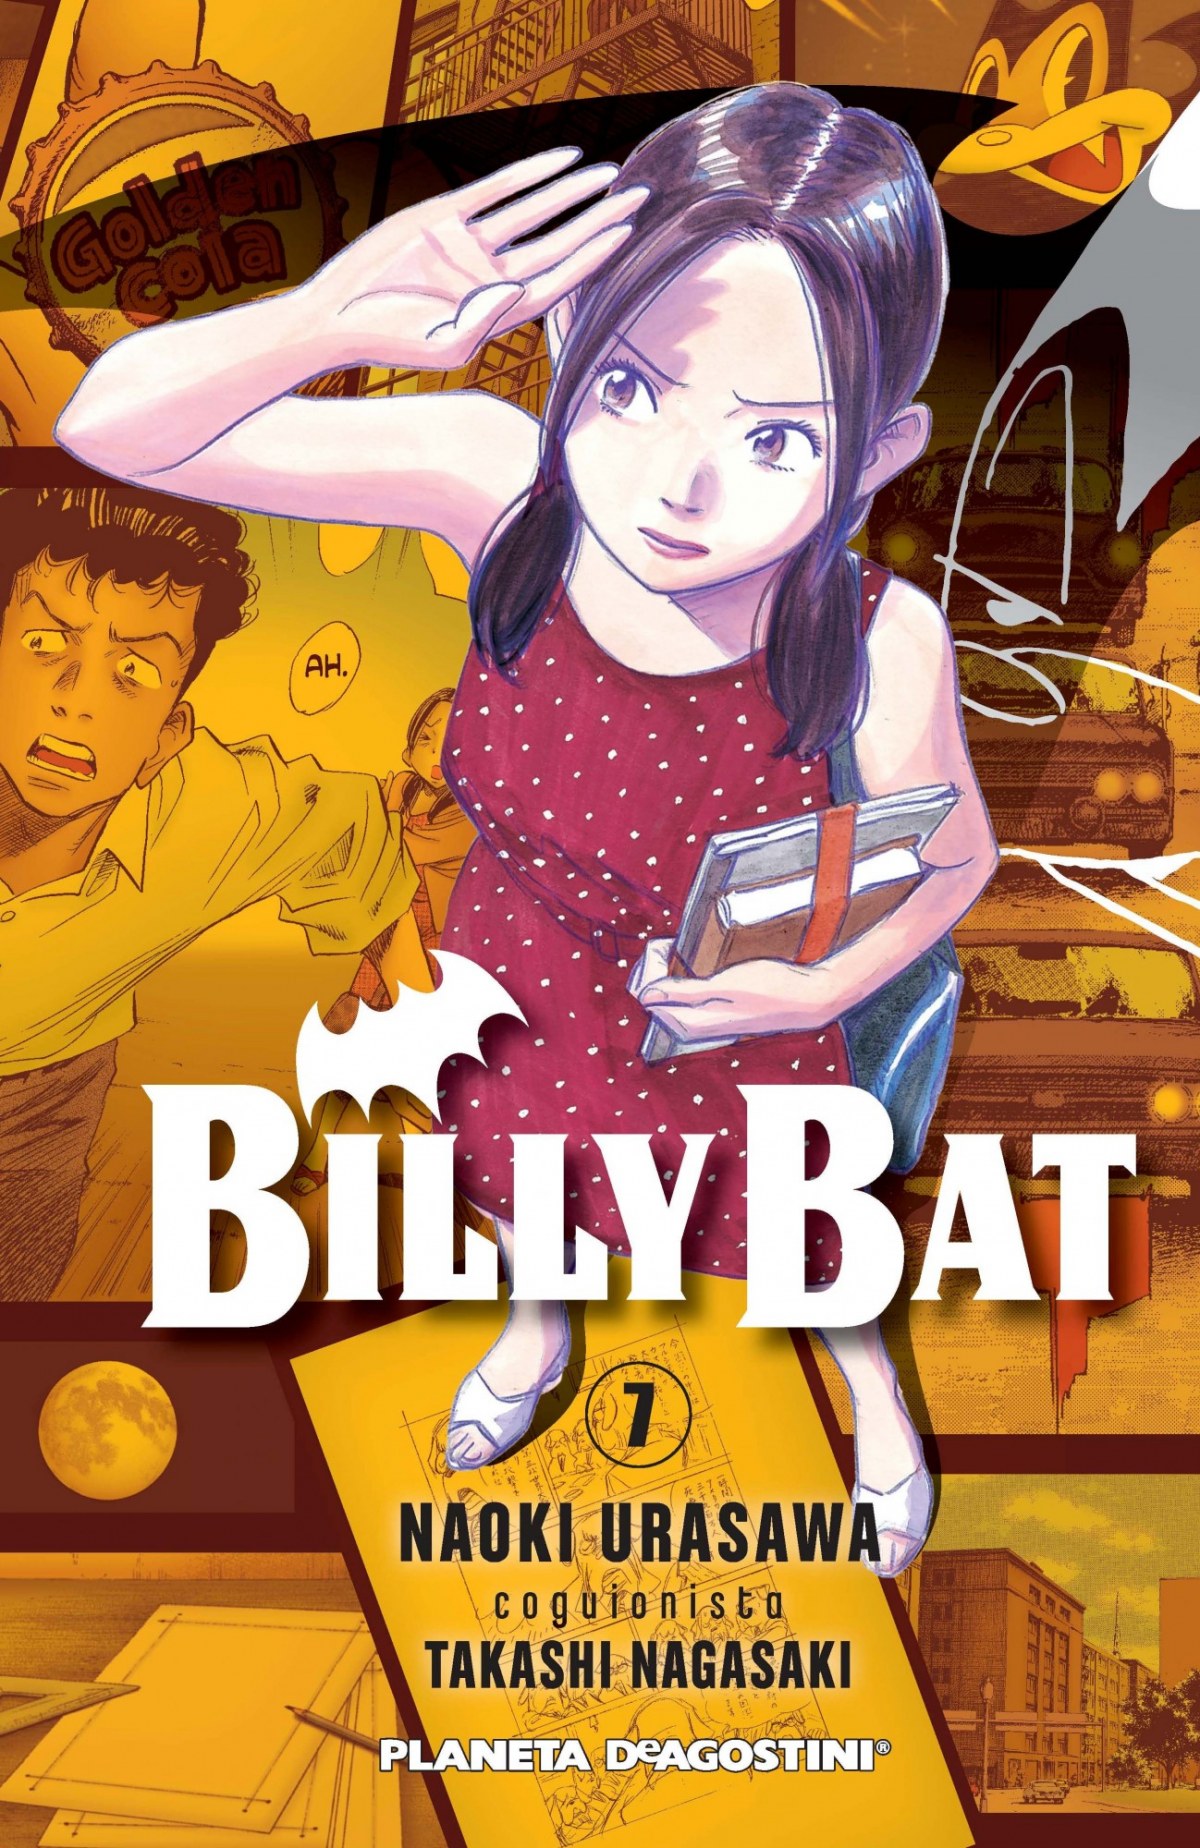 Billy bat nº 07 - Naoki Urasawa